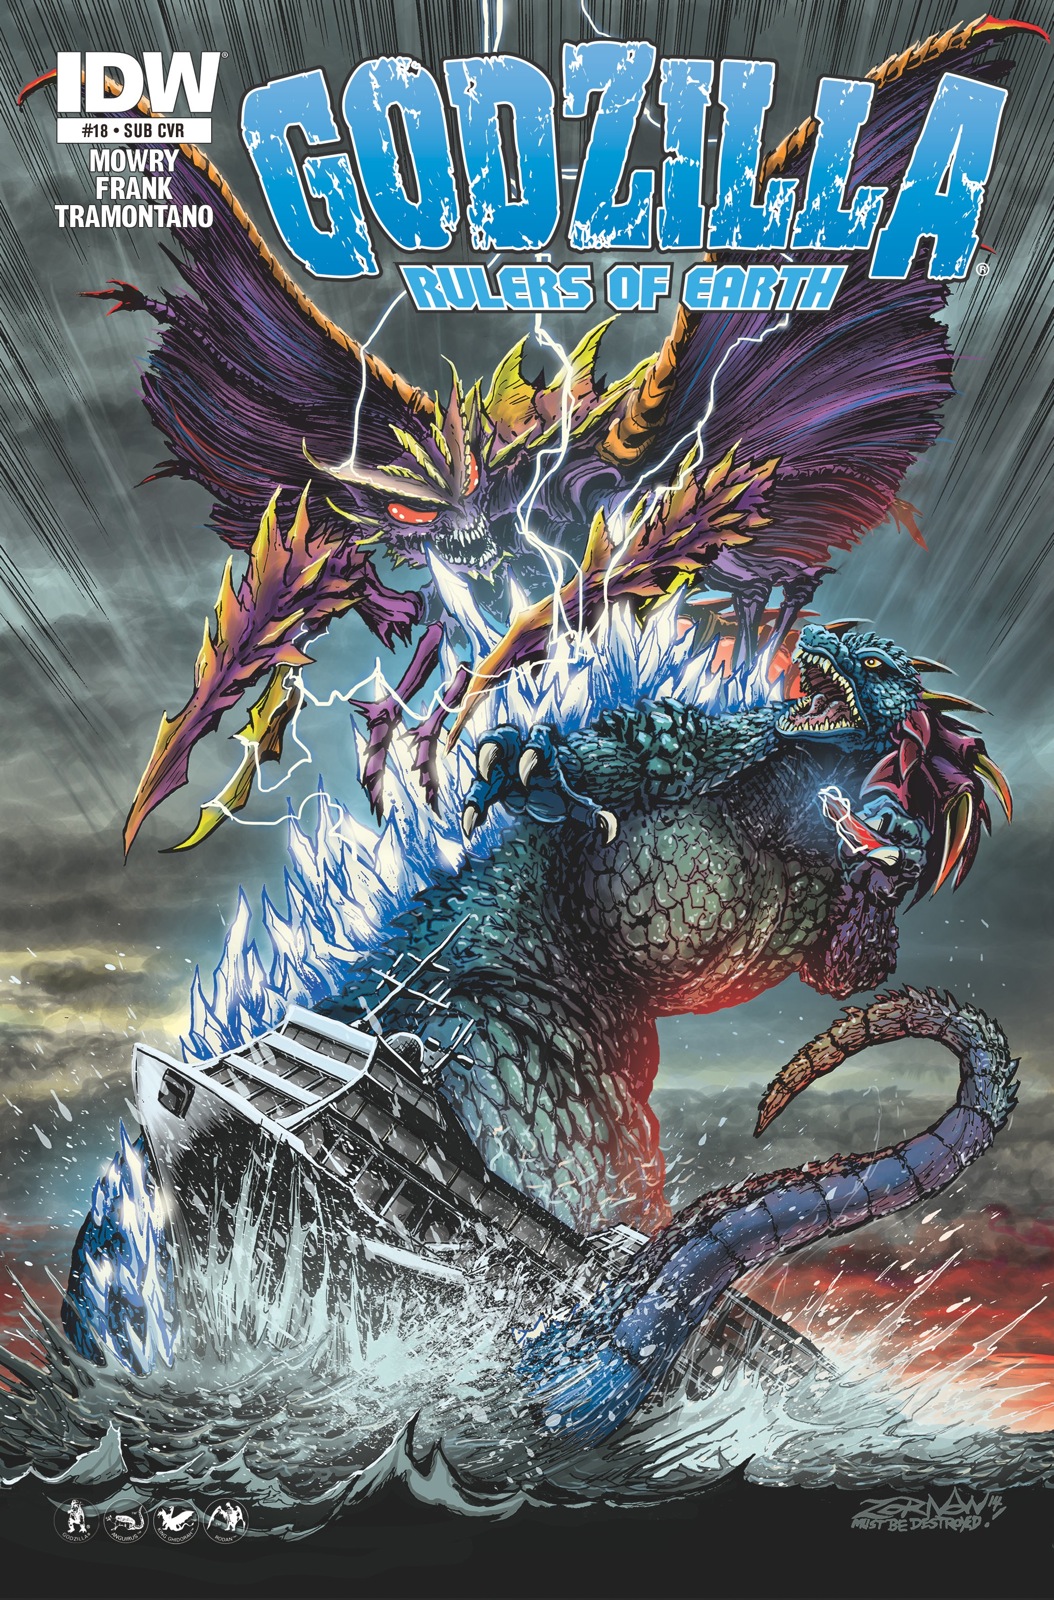 High Resolution Wallpaper | Godzilla: Rulers Of Earth 1054x1600 px